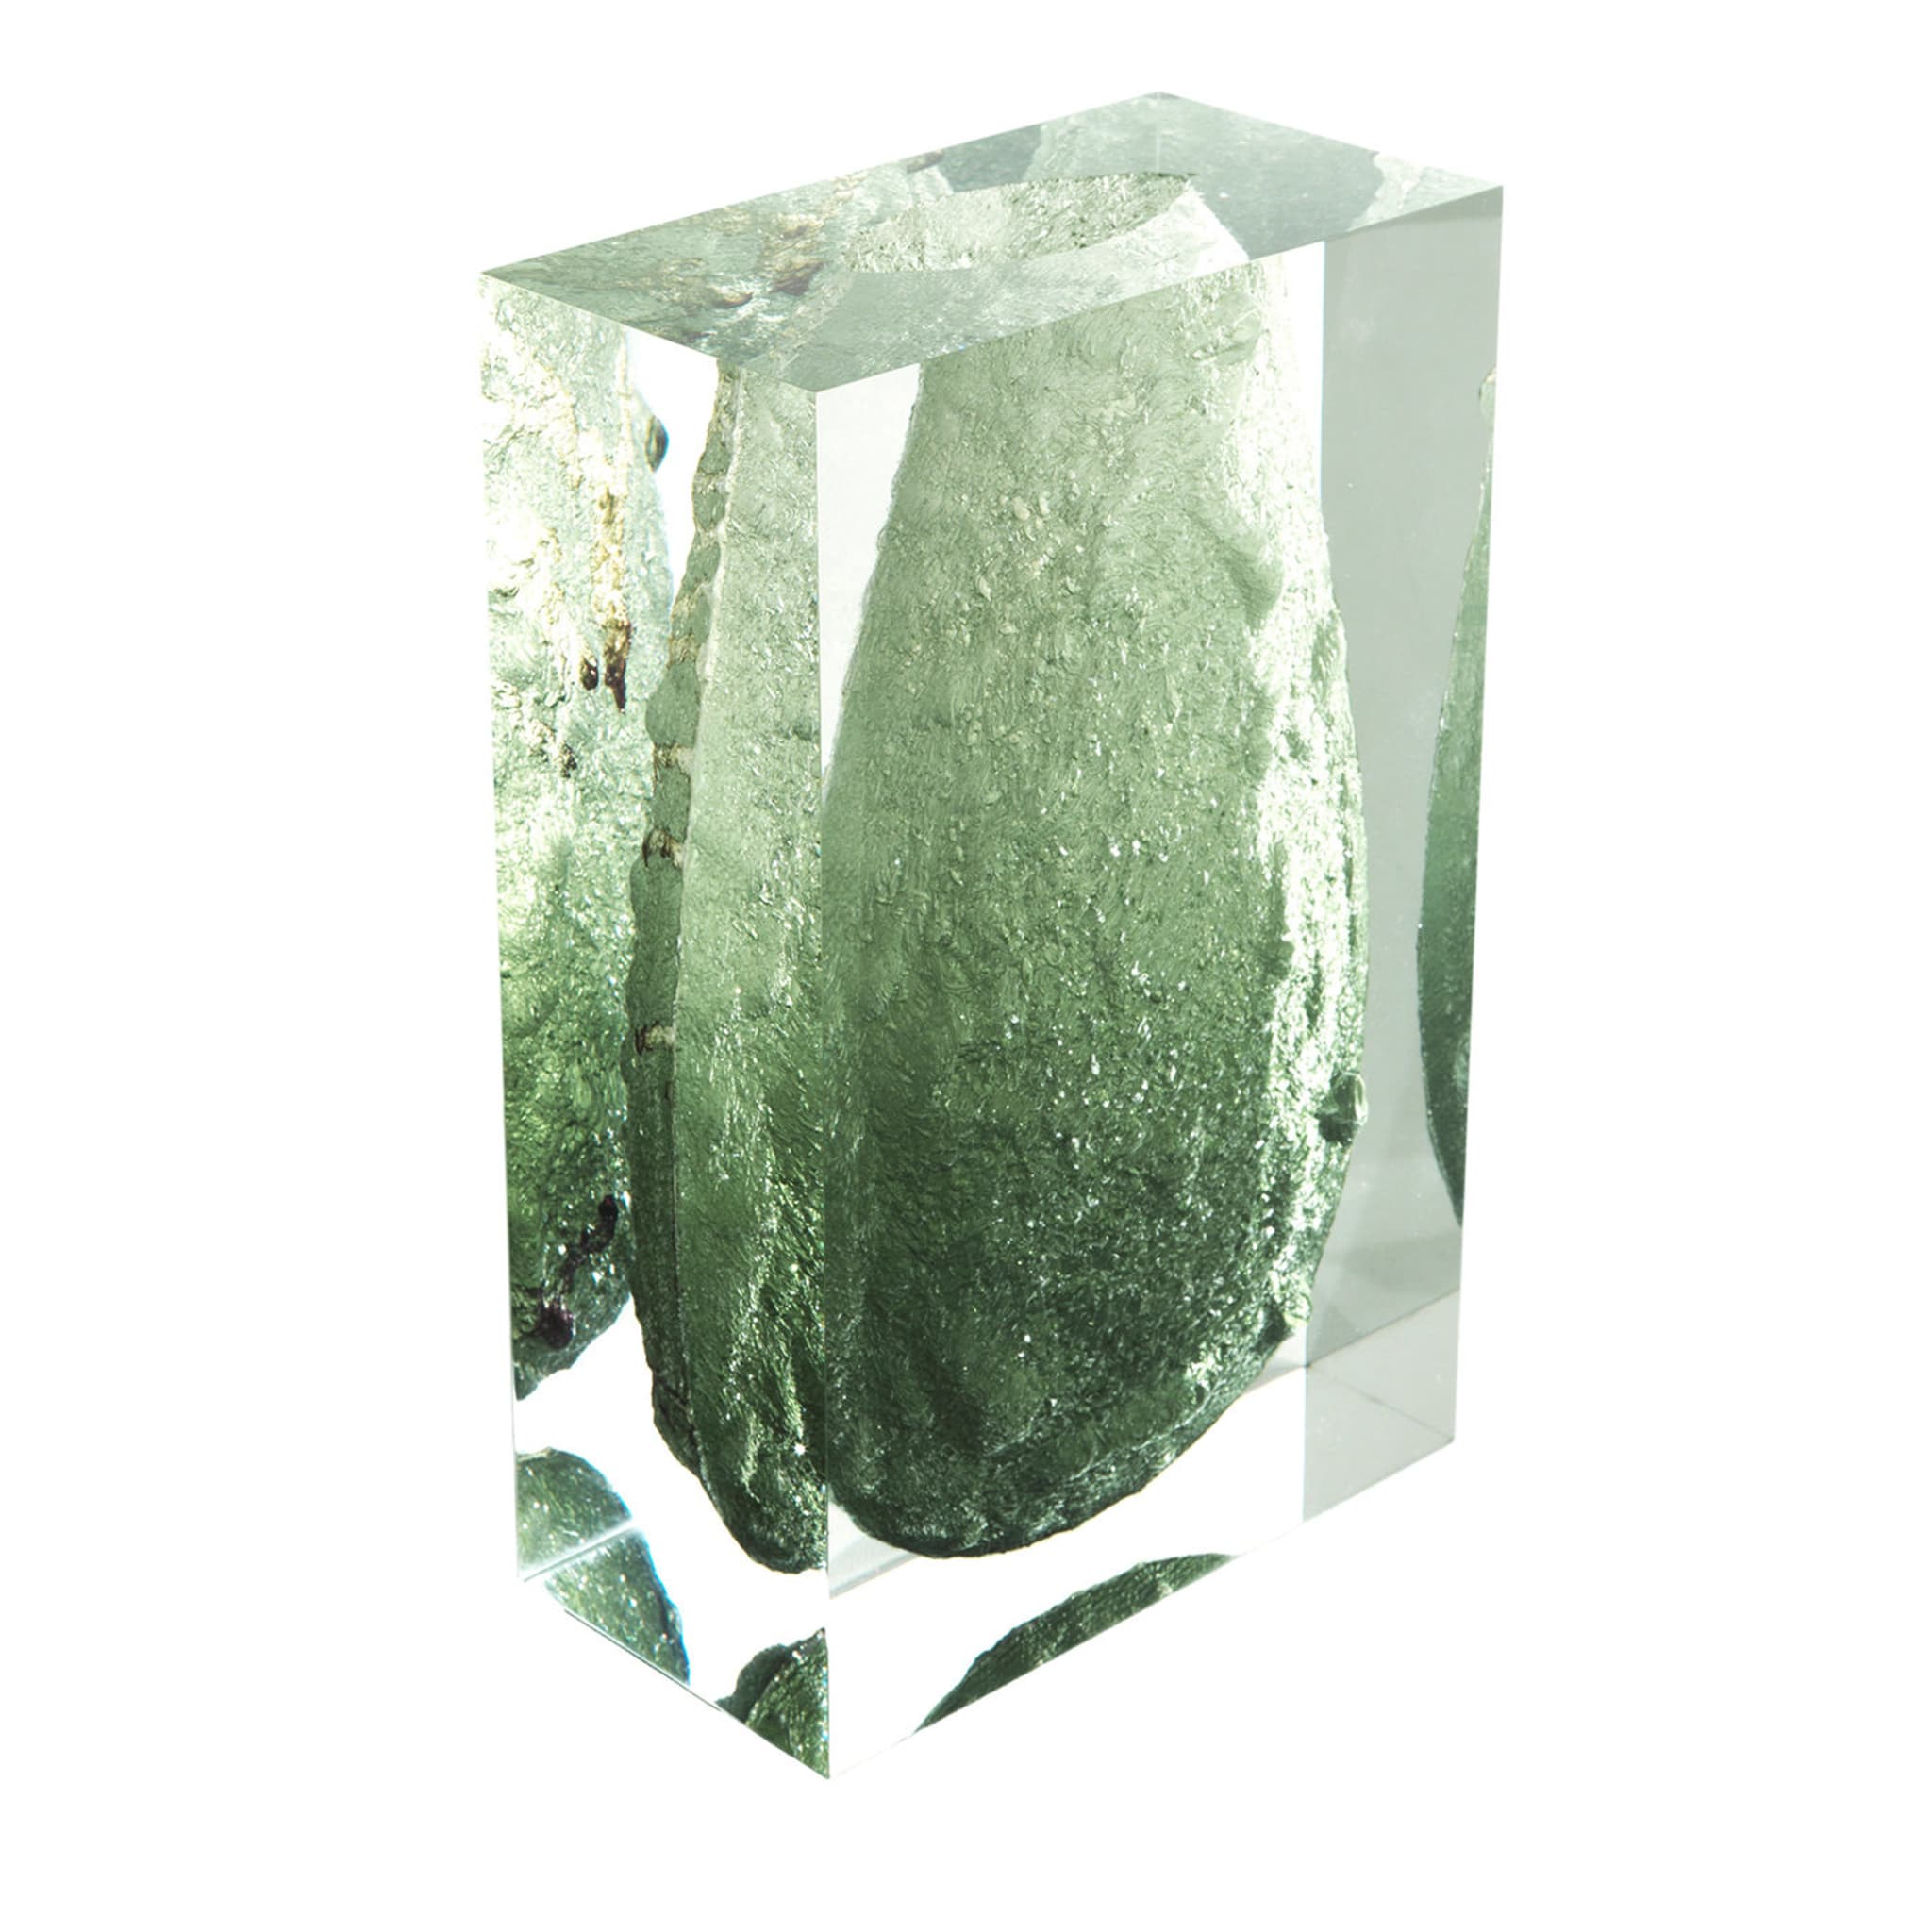 Glacoja Smaragd Vase von Analogia Project - Hauptansicht